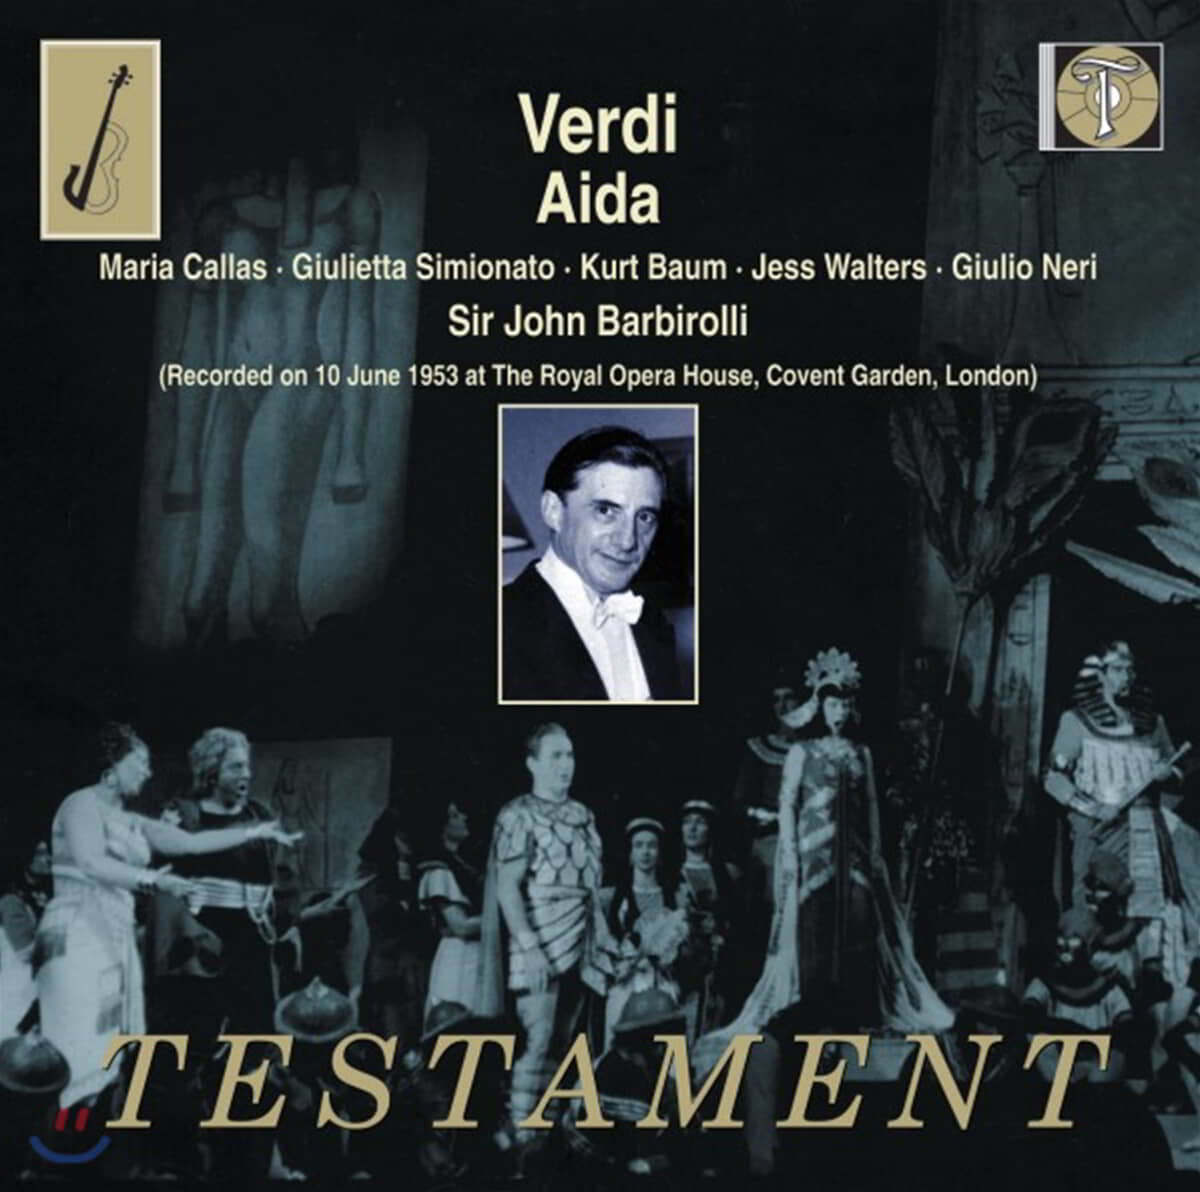 Maria Callas 베르디: 아이다 (Verdi: Aida)